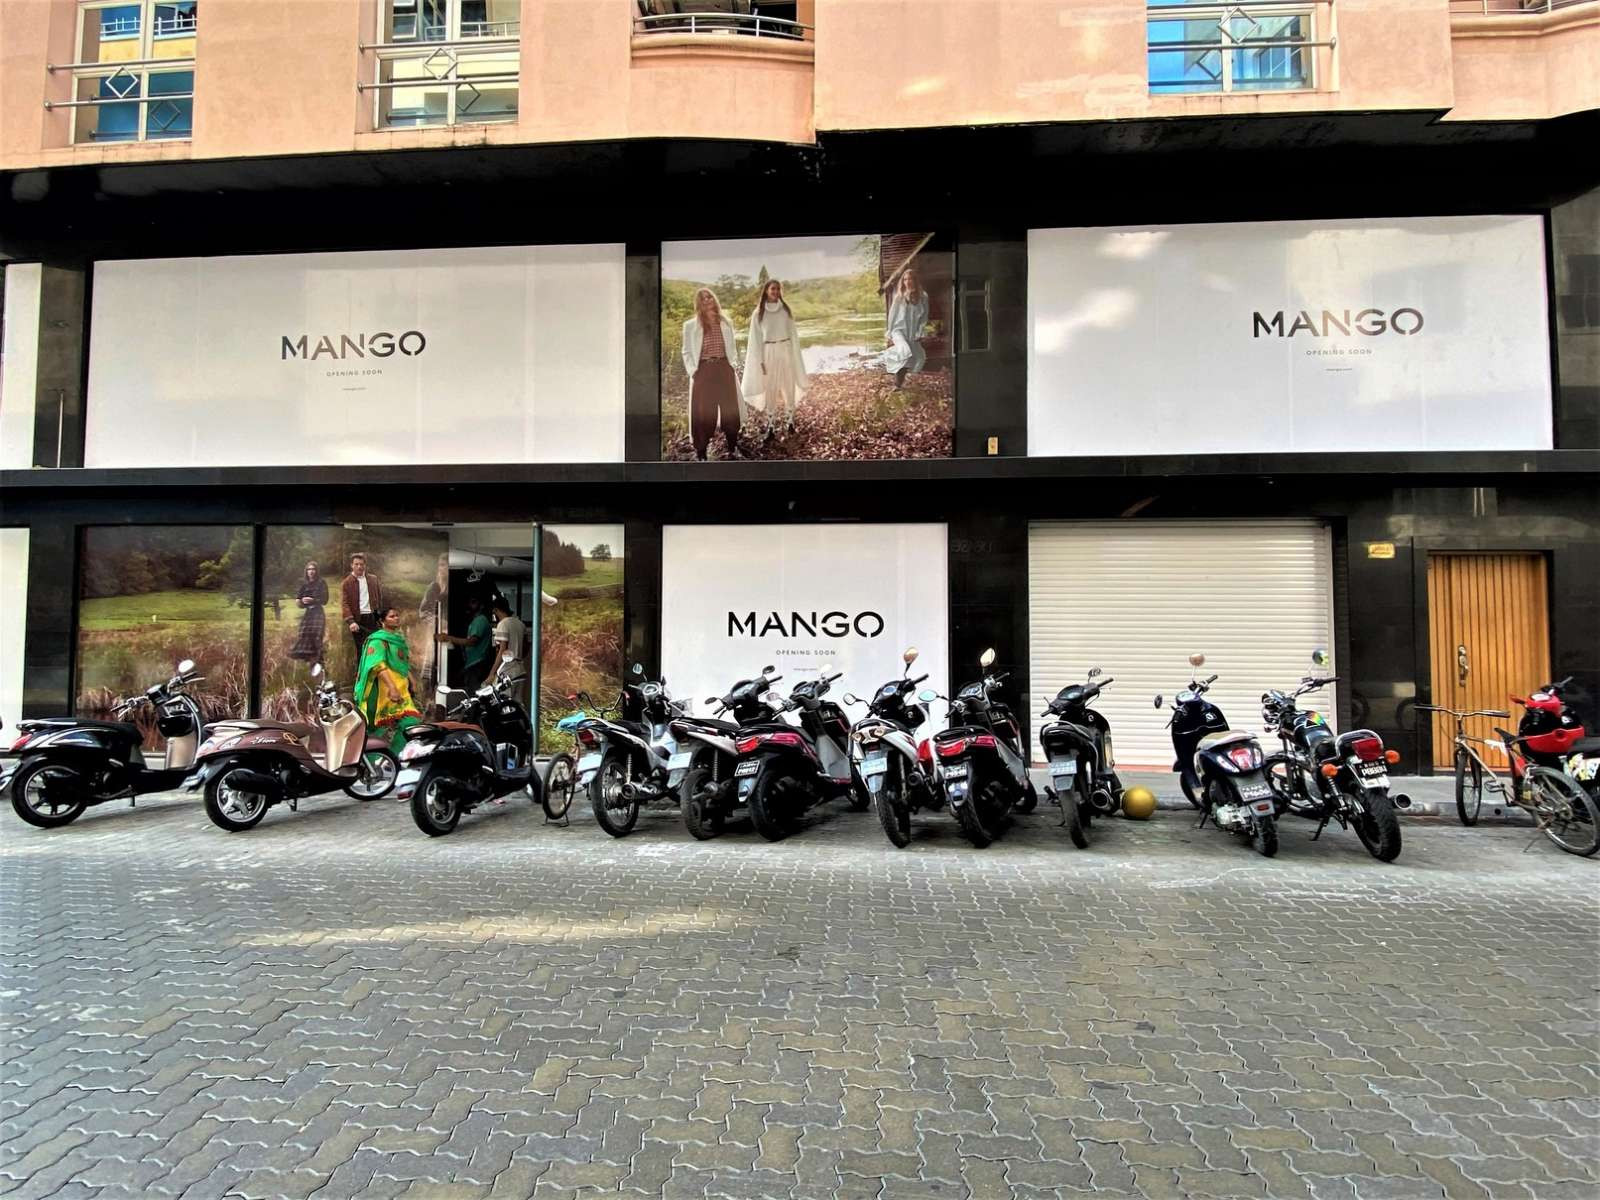 ‘Mango’ Clothing Brand Shop in Maldives